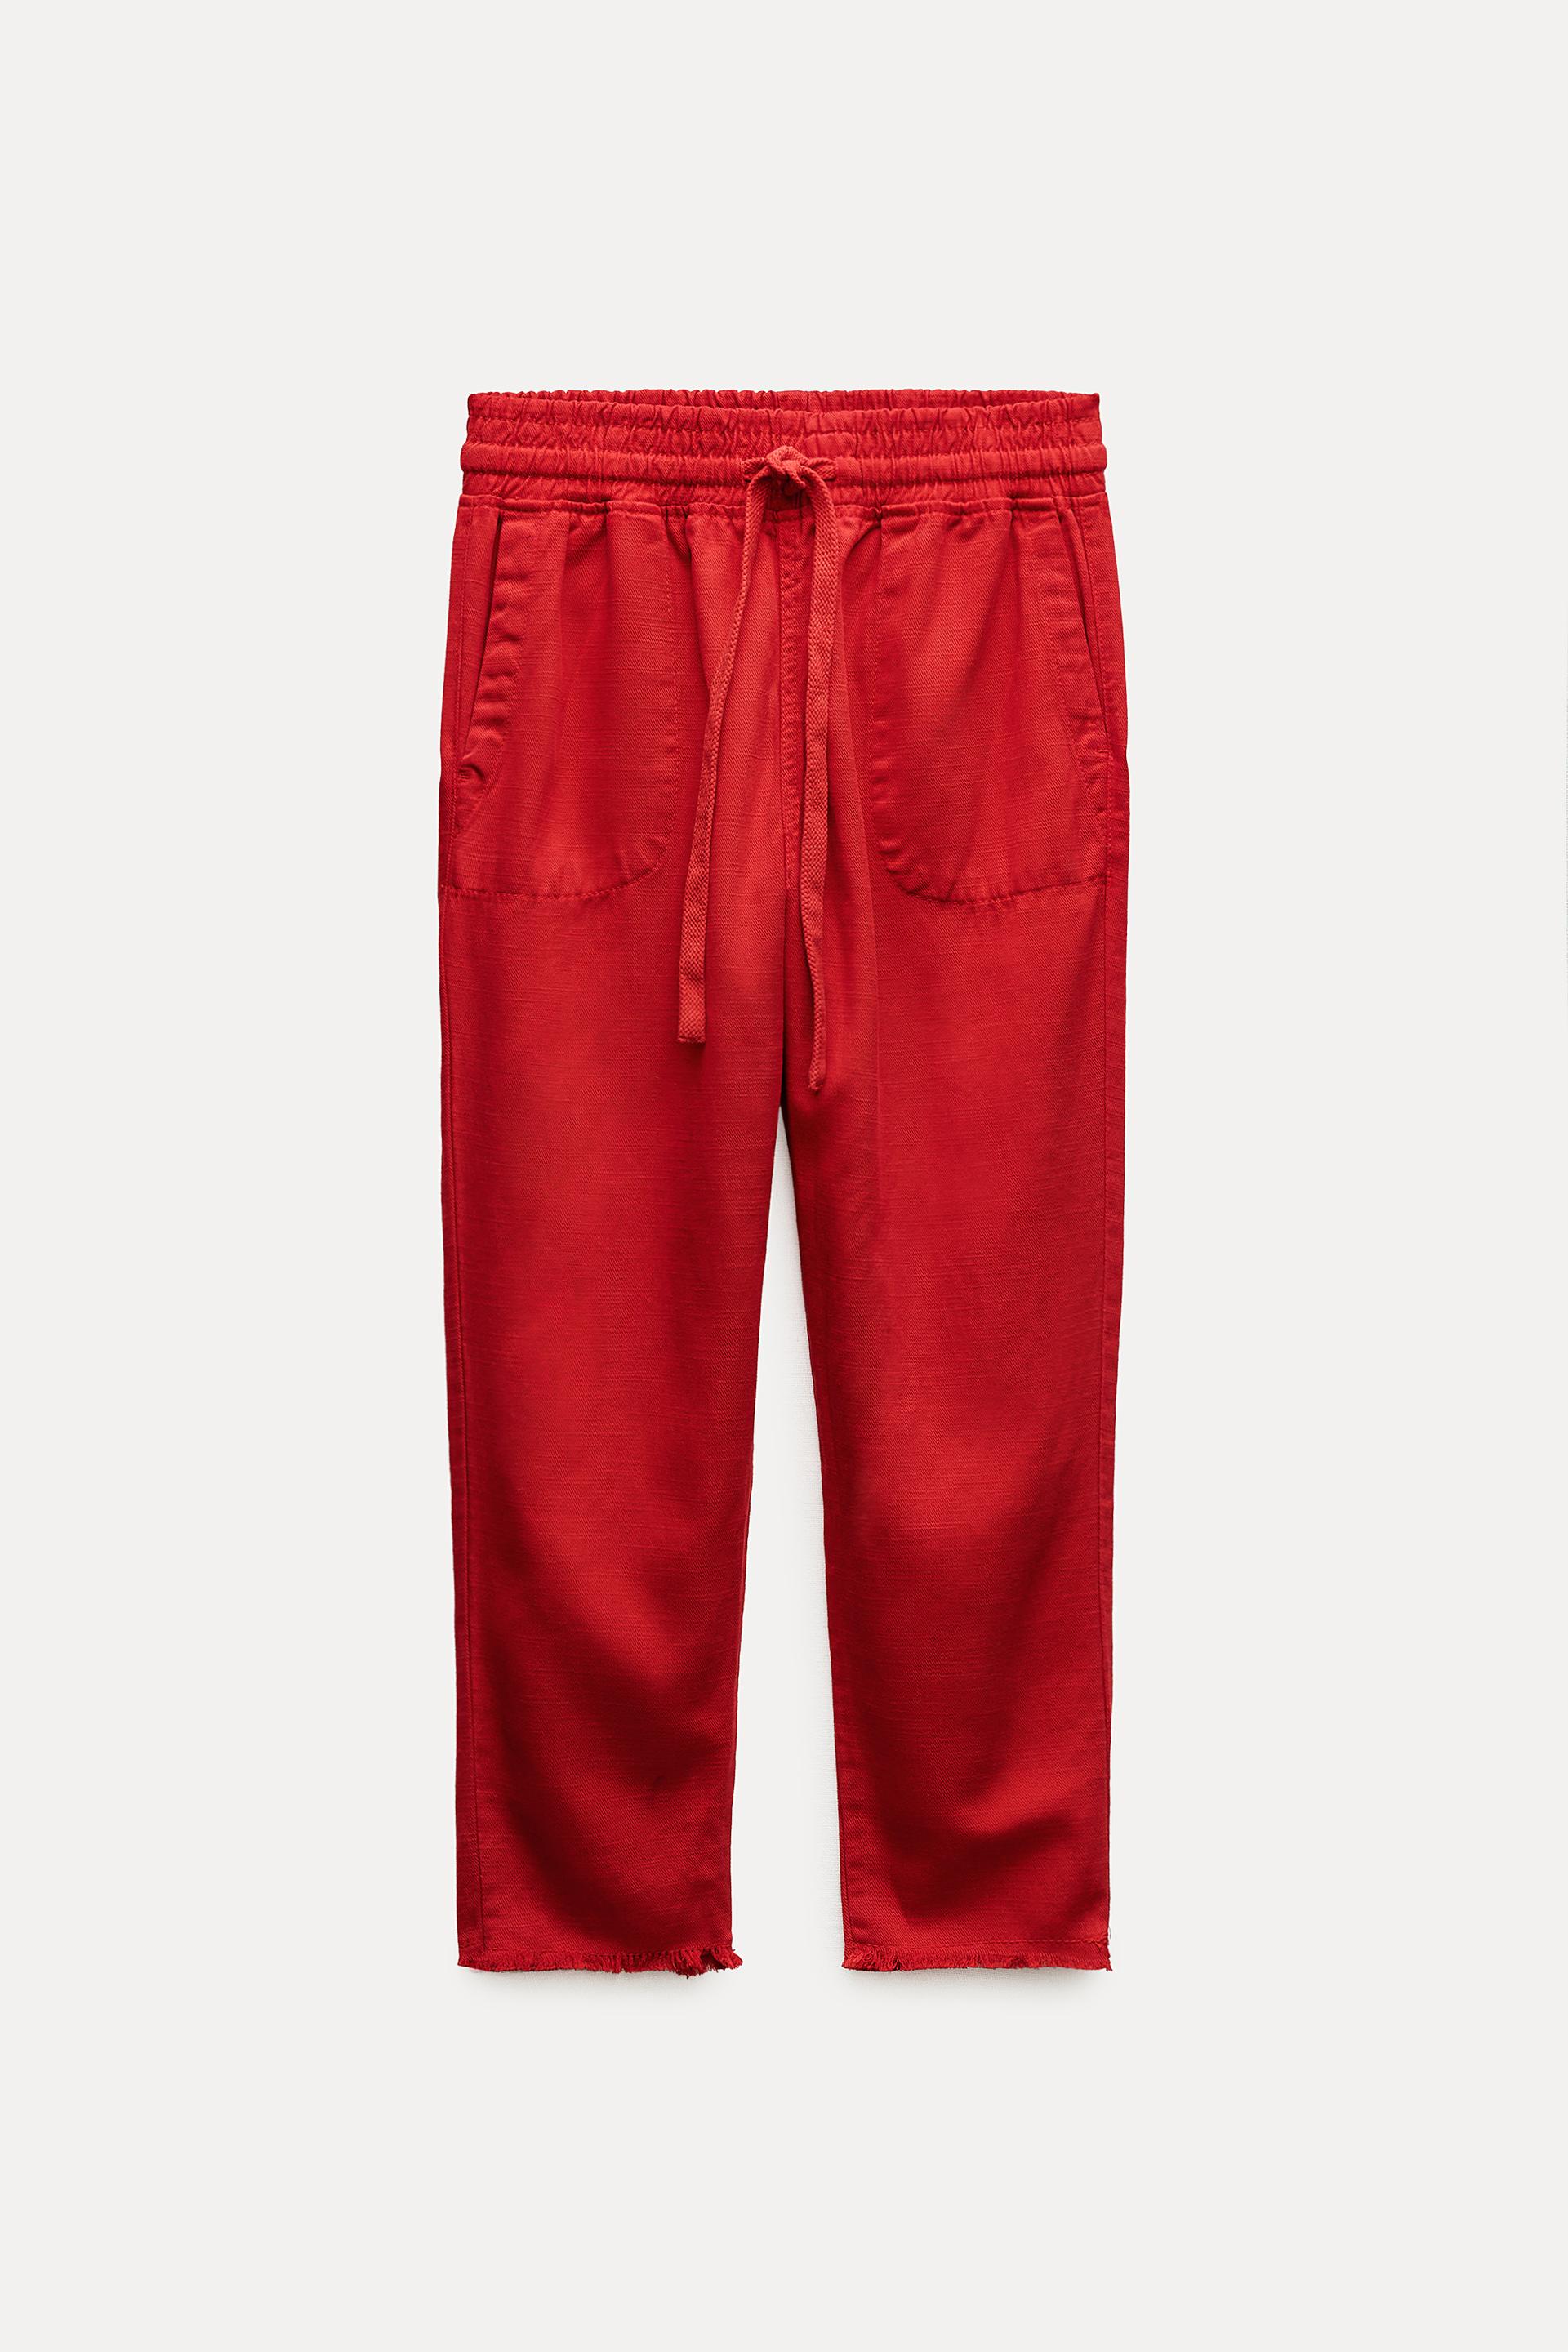 Брюки-джоггеры Zara Zw Collection Pyjama-style, красный брюки джоггеры zara синий черный красный